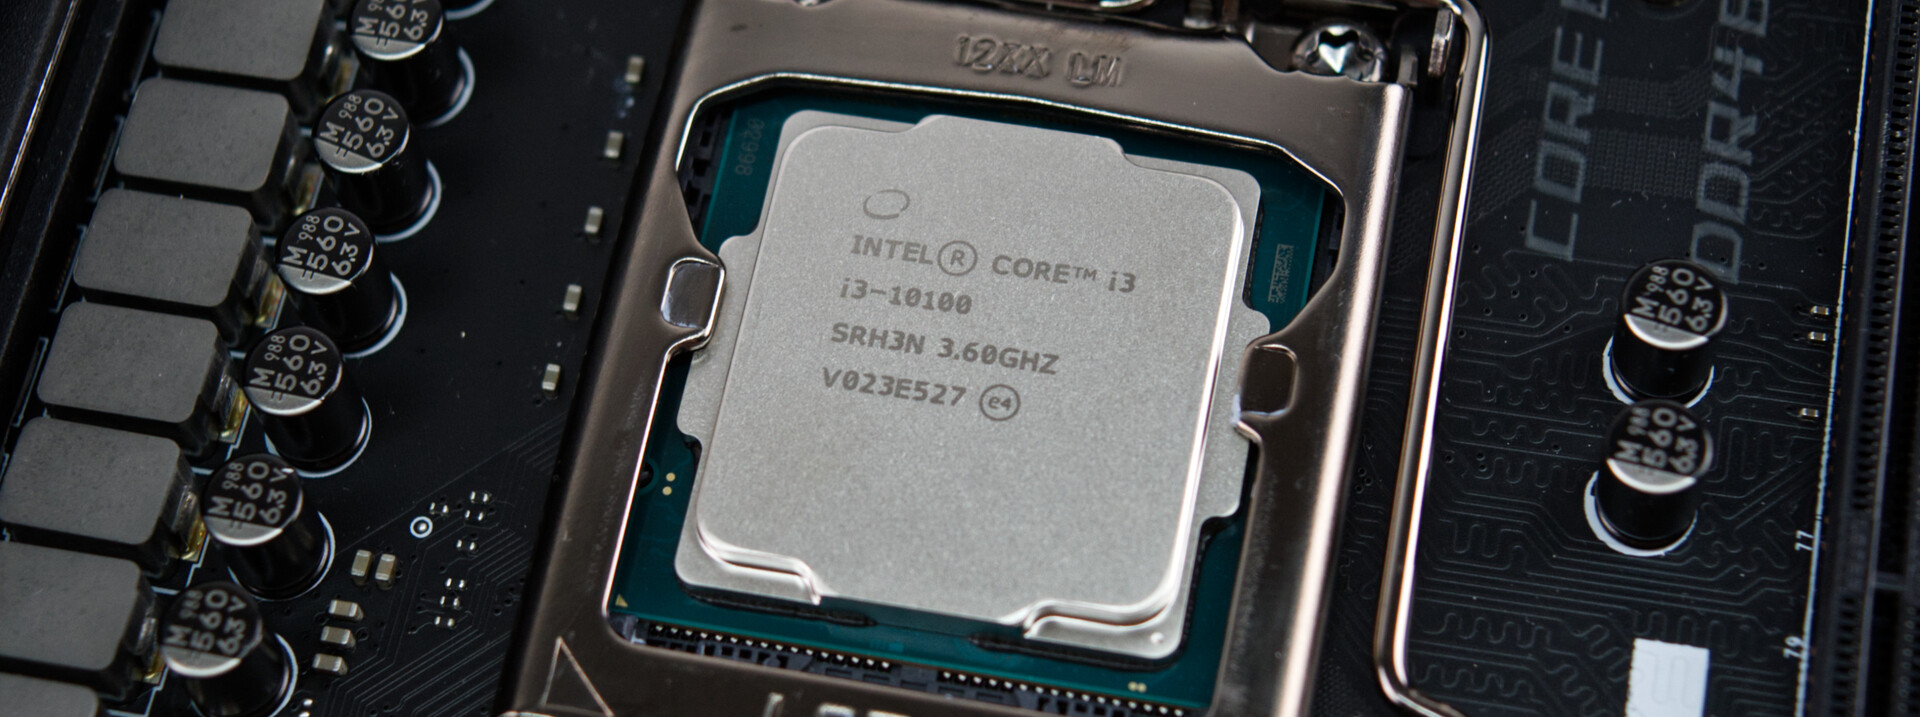 Intel Core i3-10100 Desktop Processor - Benchmarks and Specs